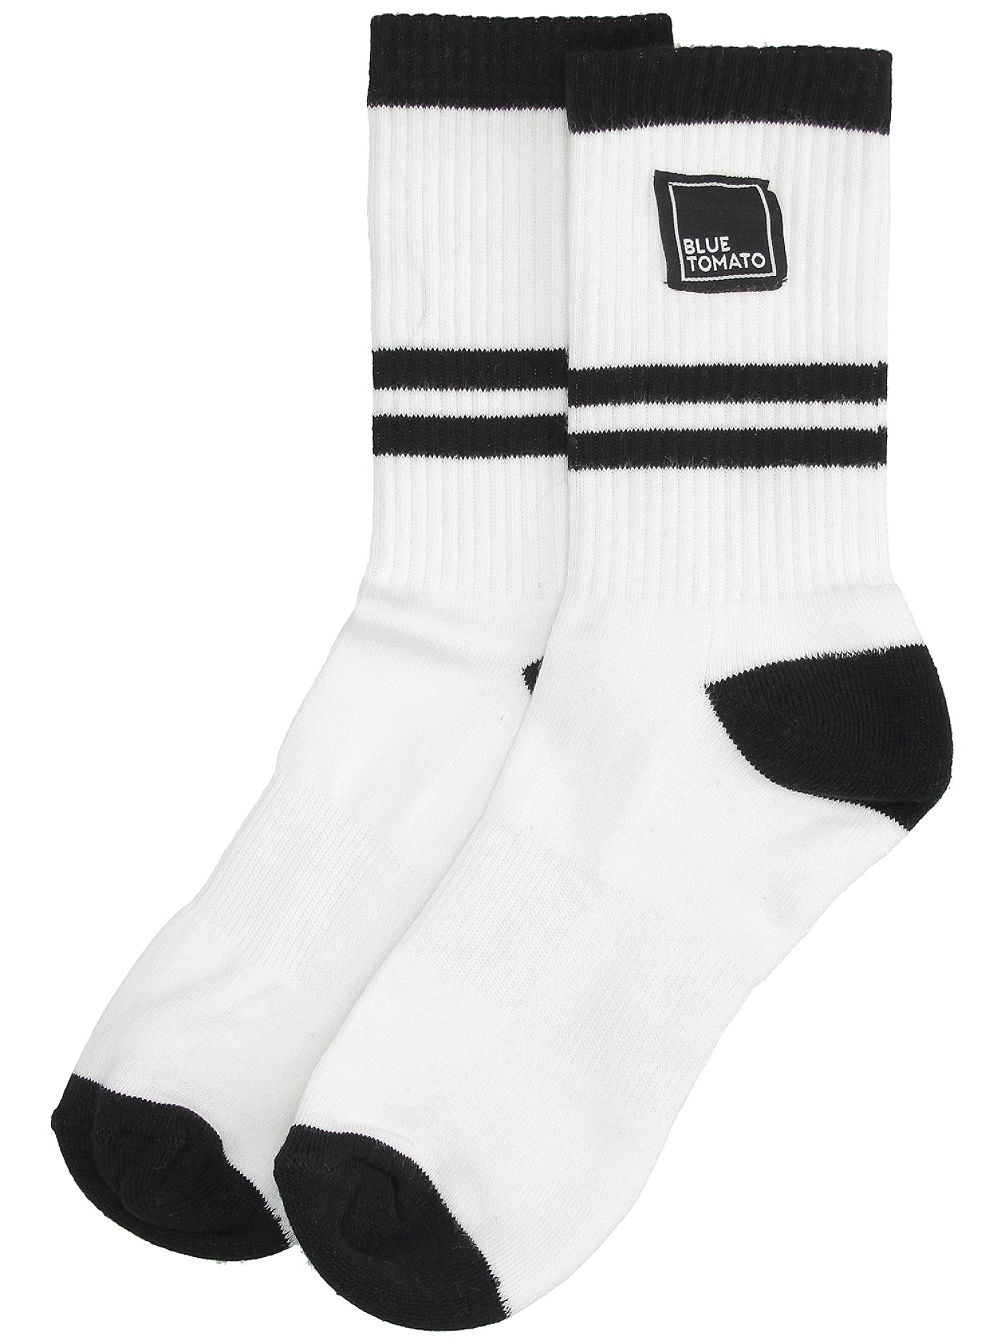 BT Authentic Socks